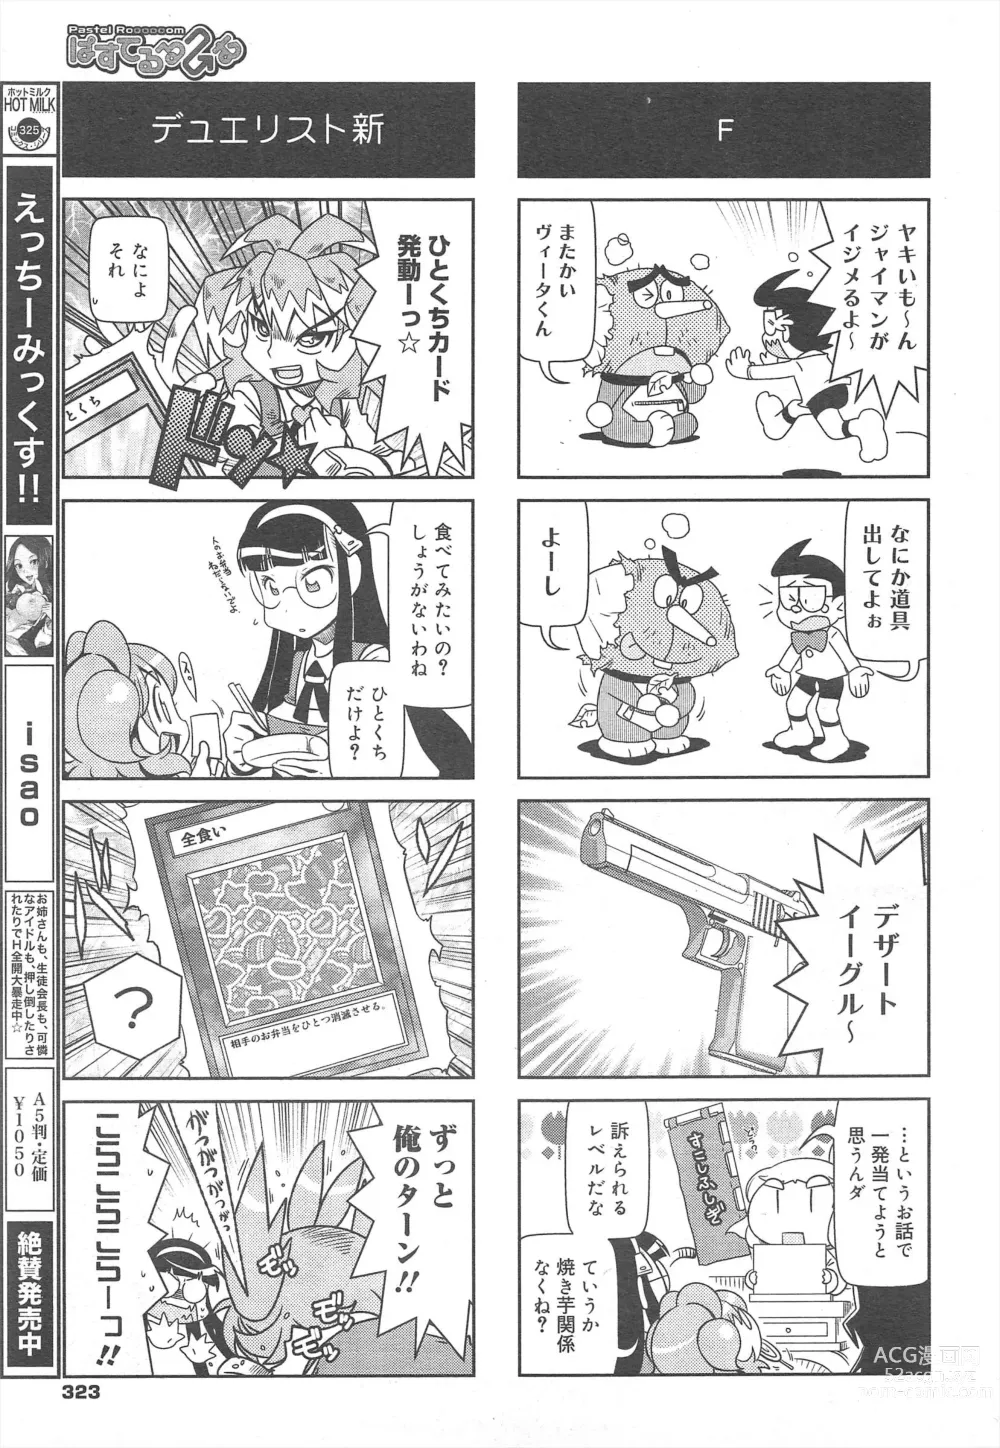 Page 323 of manga COMIC Megamilk 2011-12 Vol.18